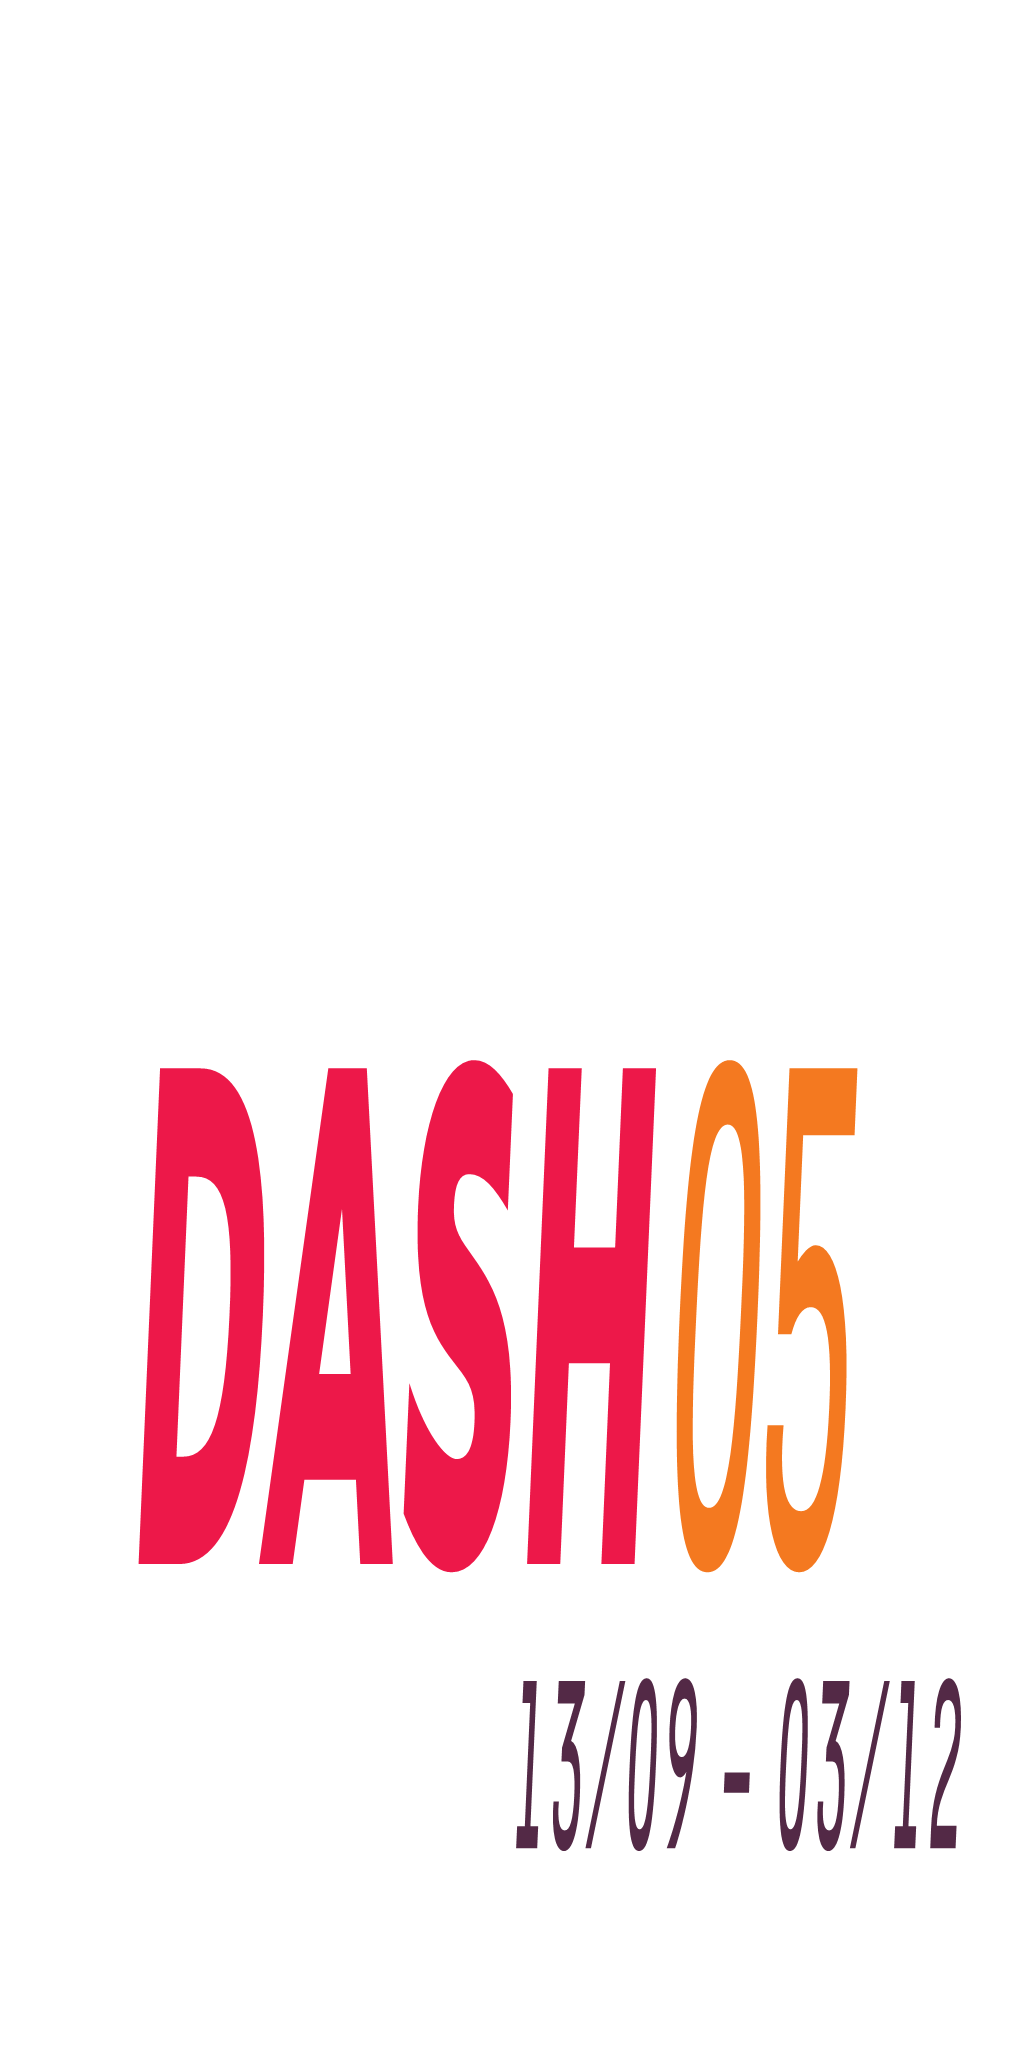 DASH05 Brochure 297X148 20Pp II 1/9/05 10:22 Pm Page 1